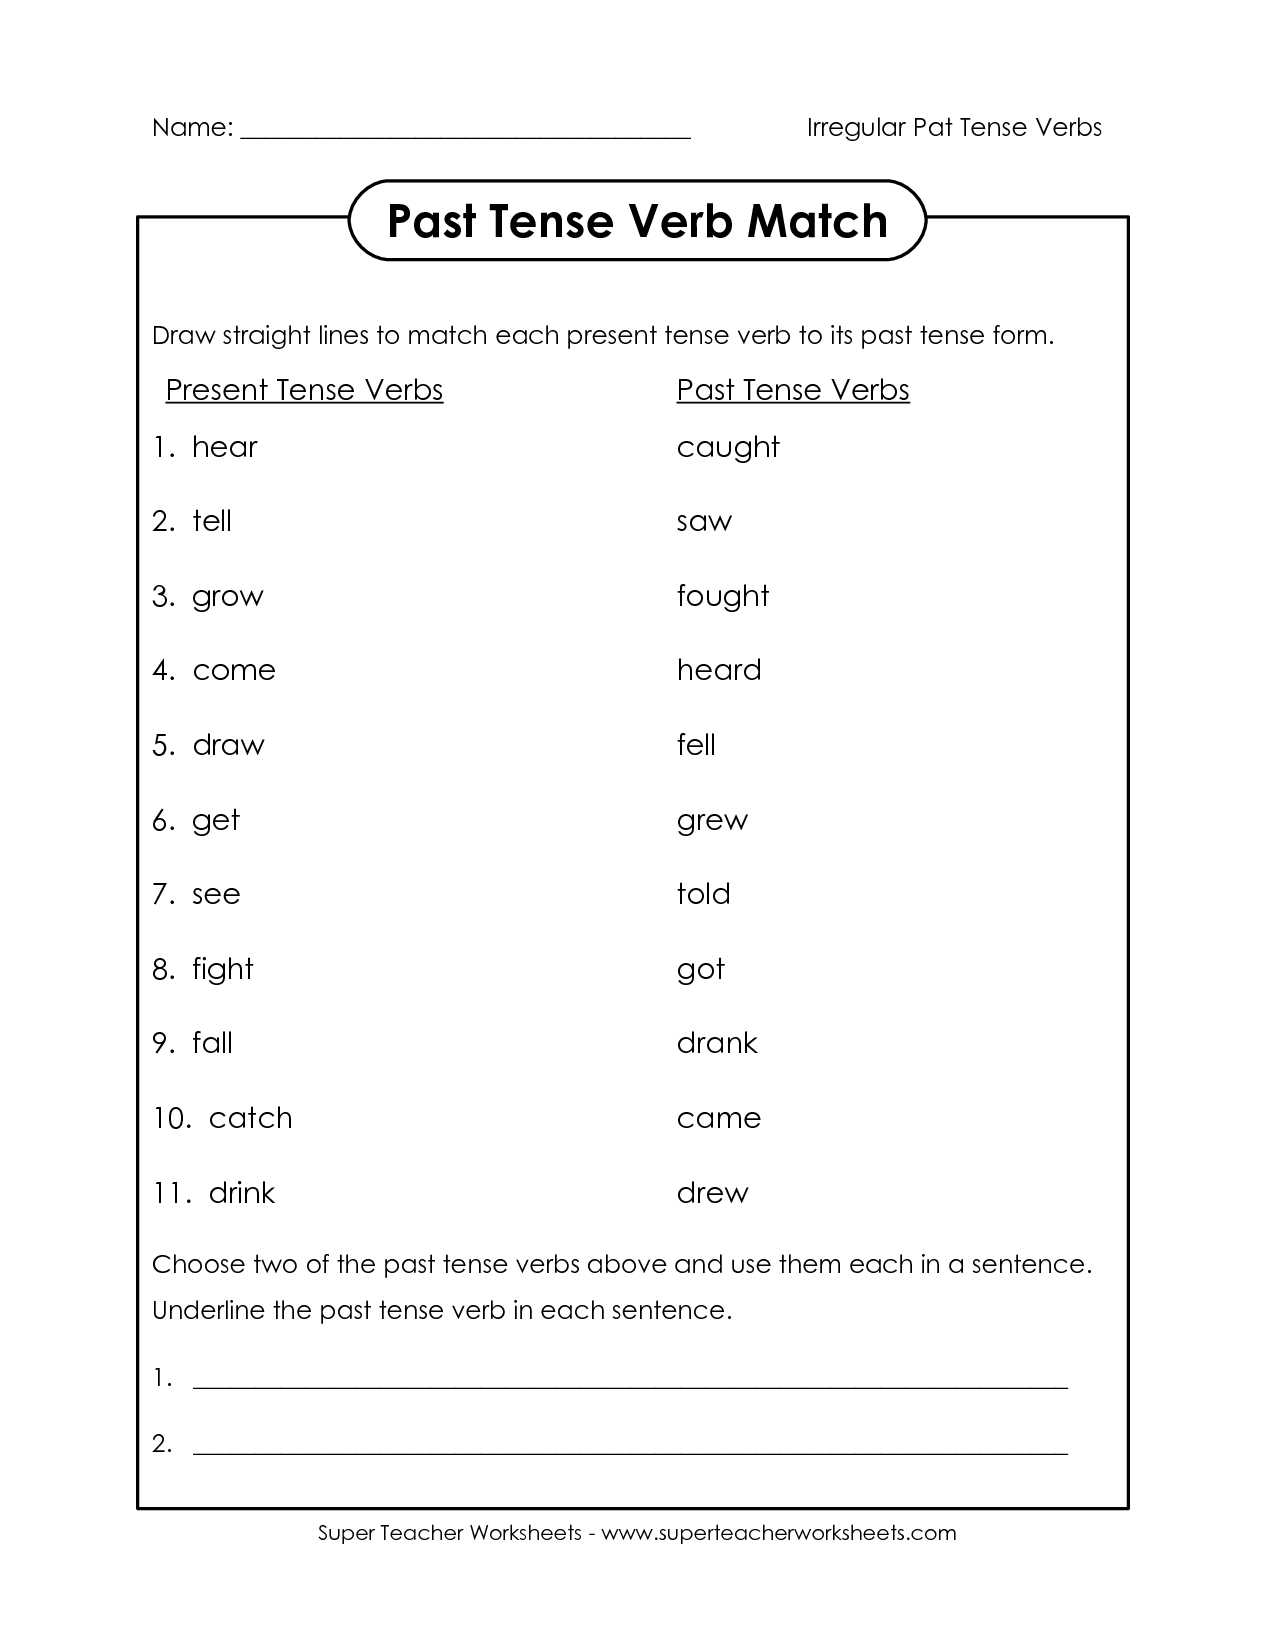 Preterite Practice Worksheet with 38 Irregular Past Tense Verbs Worksheet Irregular Past Tense Verbs